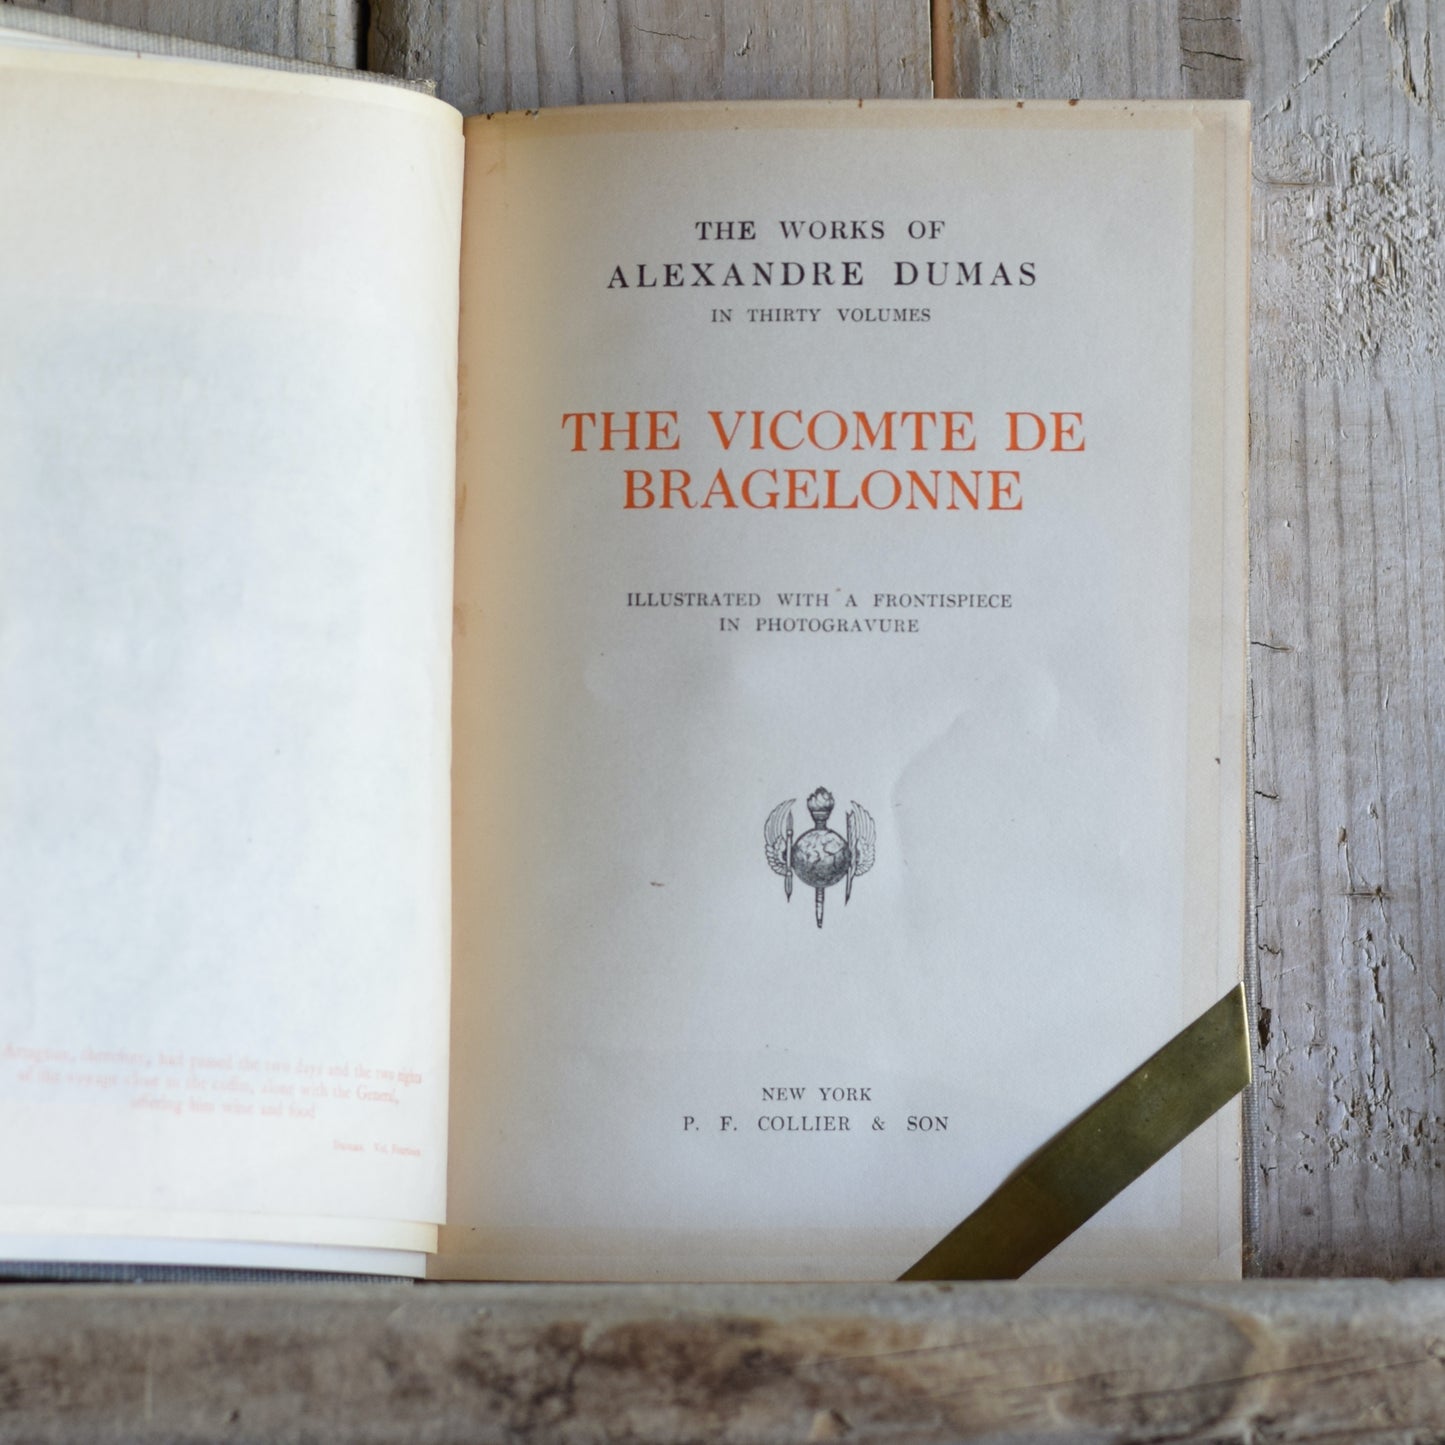 Antique Fiction Hardbacks: The Works of Alexandre Dumas in Thirty Volumes, set of 3